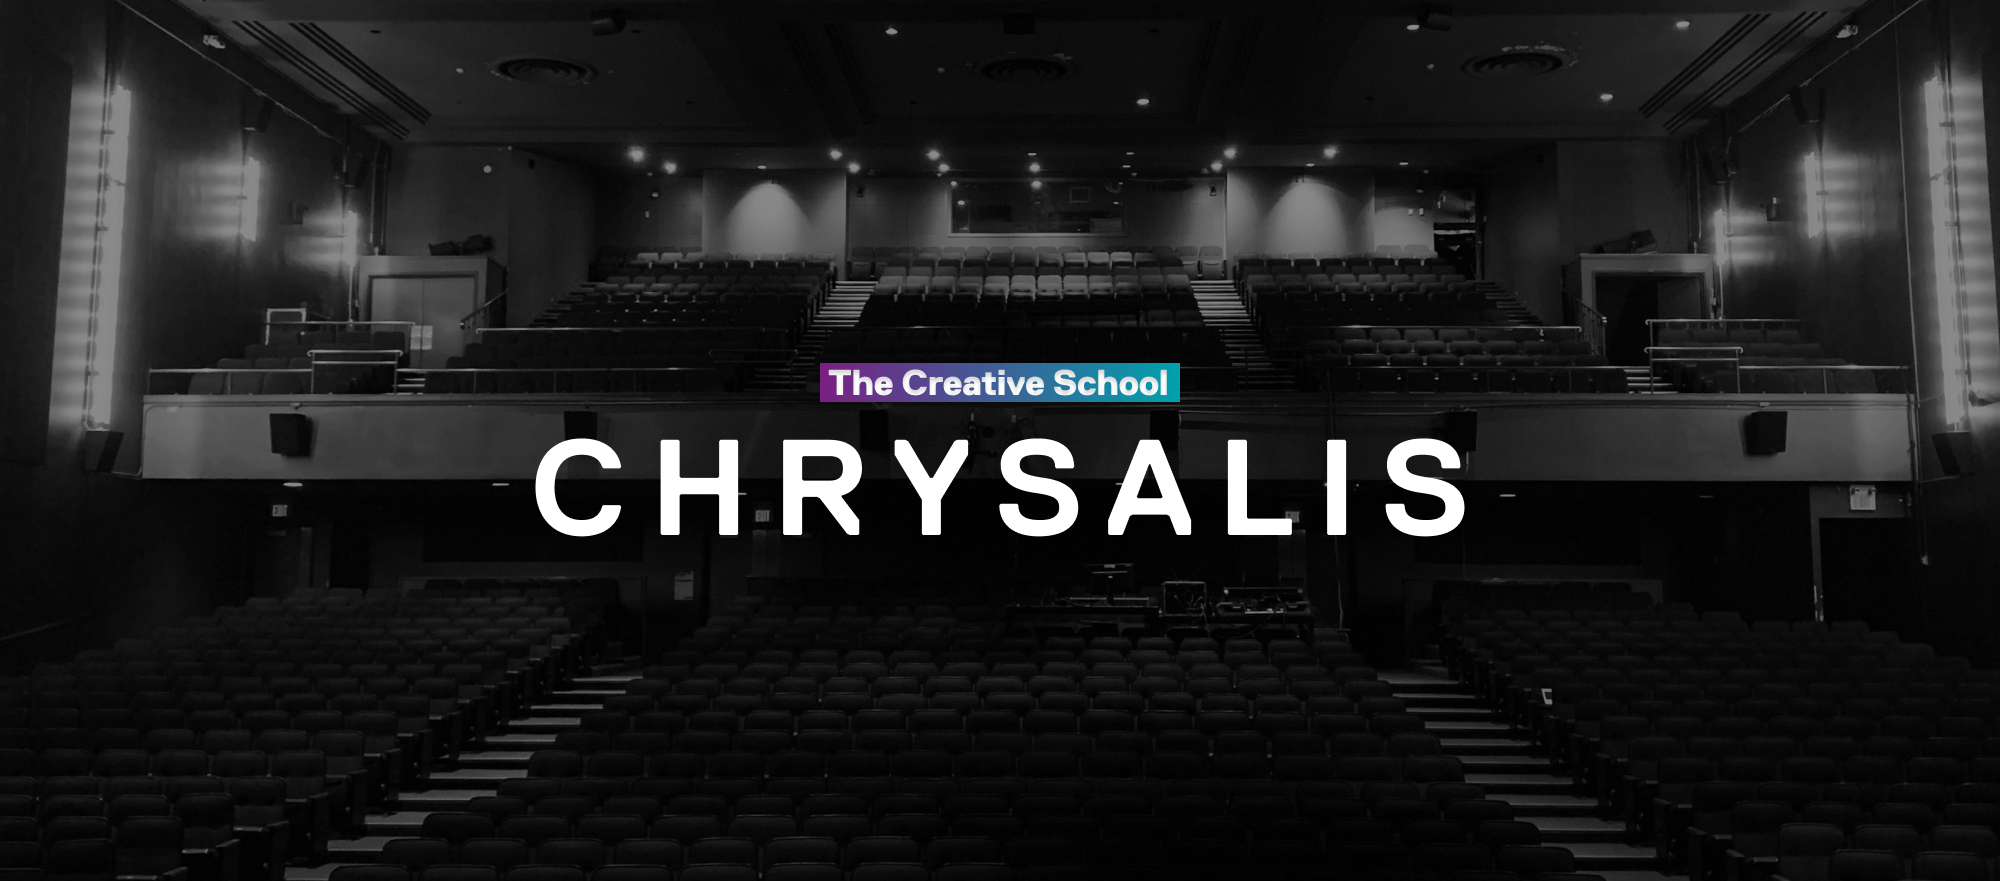 The Creative School Chrysalis theatre